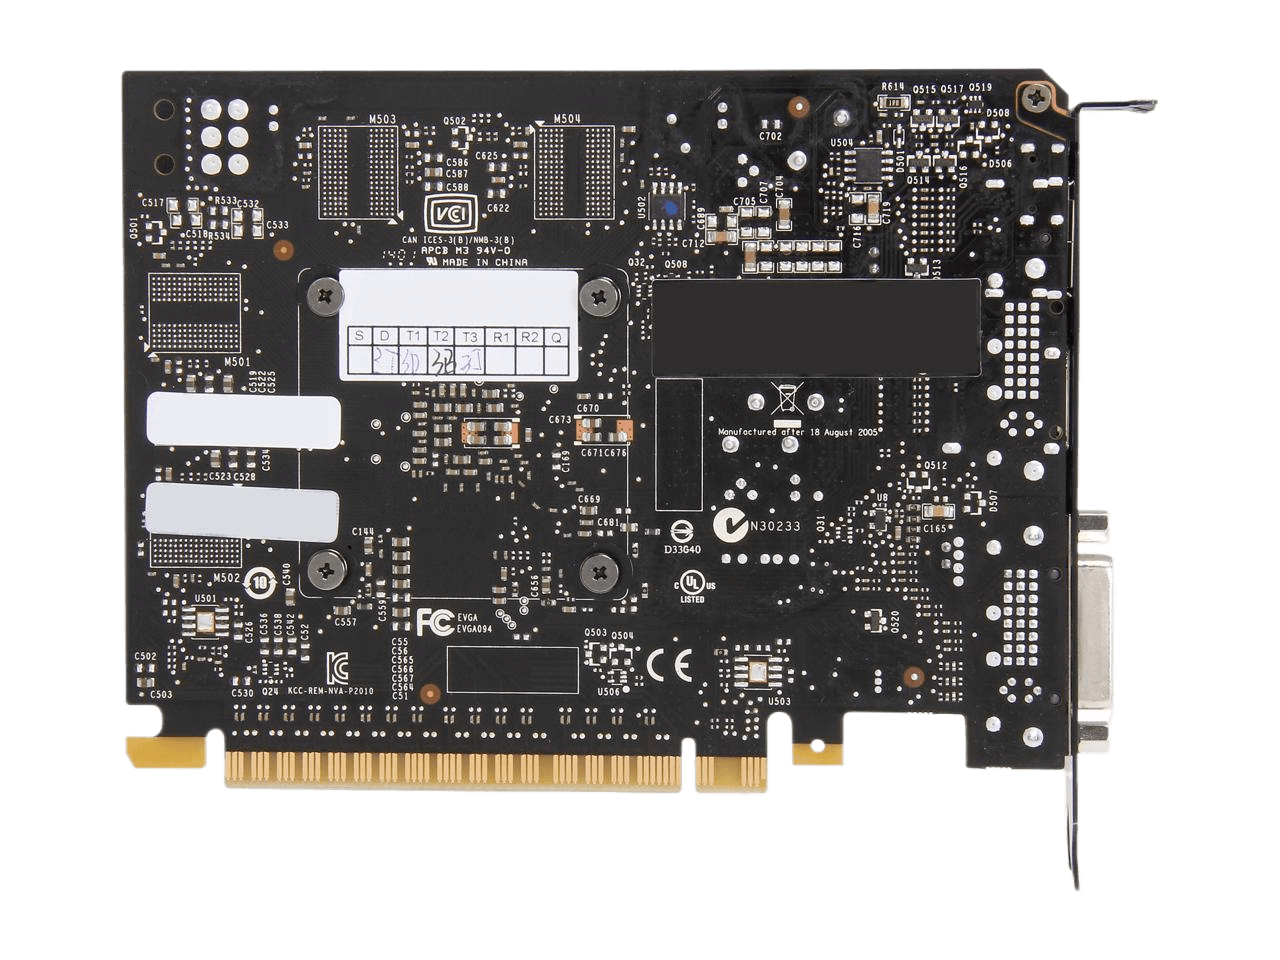 EVGA GeForce GTX 750 Ti Superclocked 2GB 128-Bit GDDR5 G-SYNC Support PCI Express 3.0 Video Card 02G-P4-3753-KR